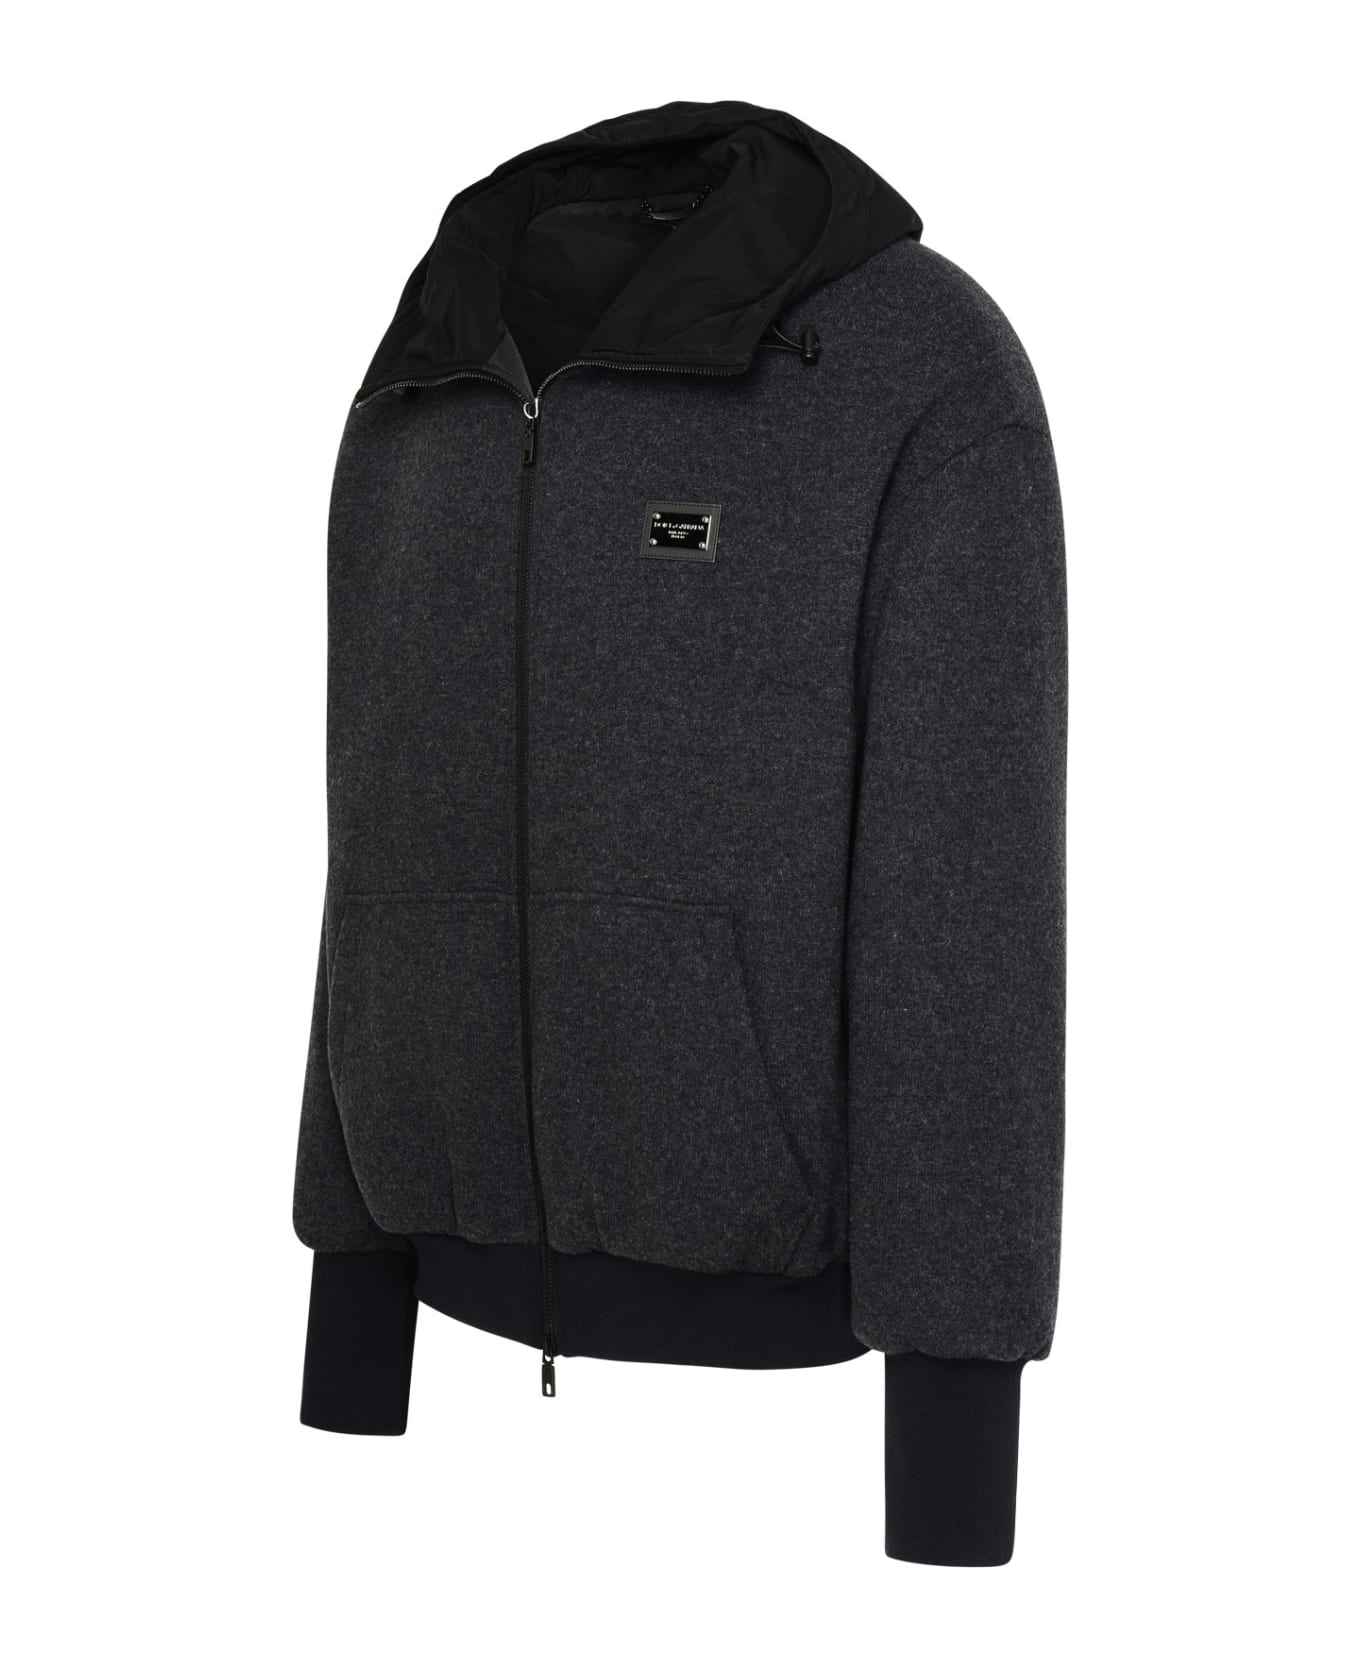 Dolce & Gabbana Grey Wool Blend Bomber Jacket - Black